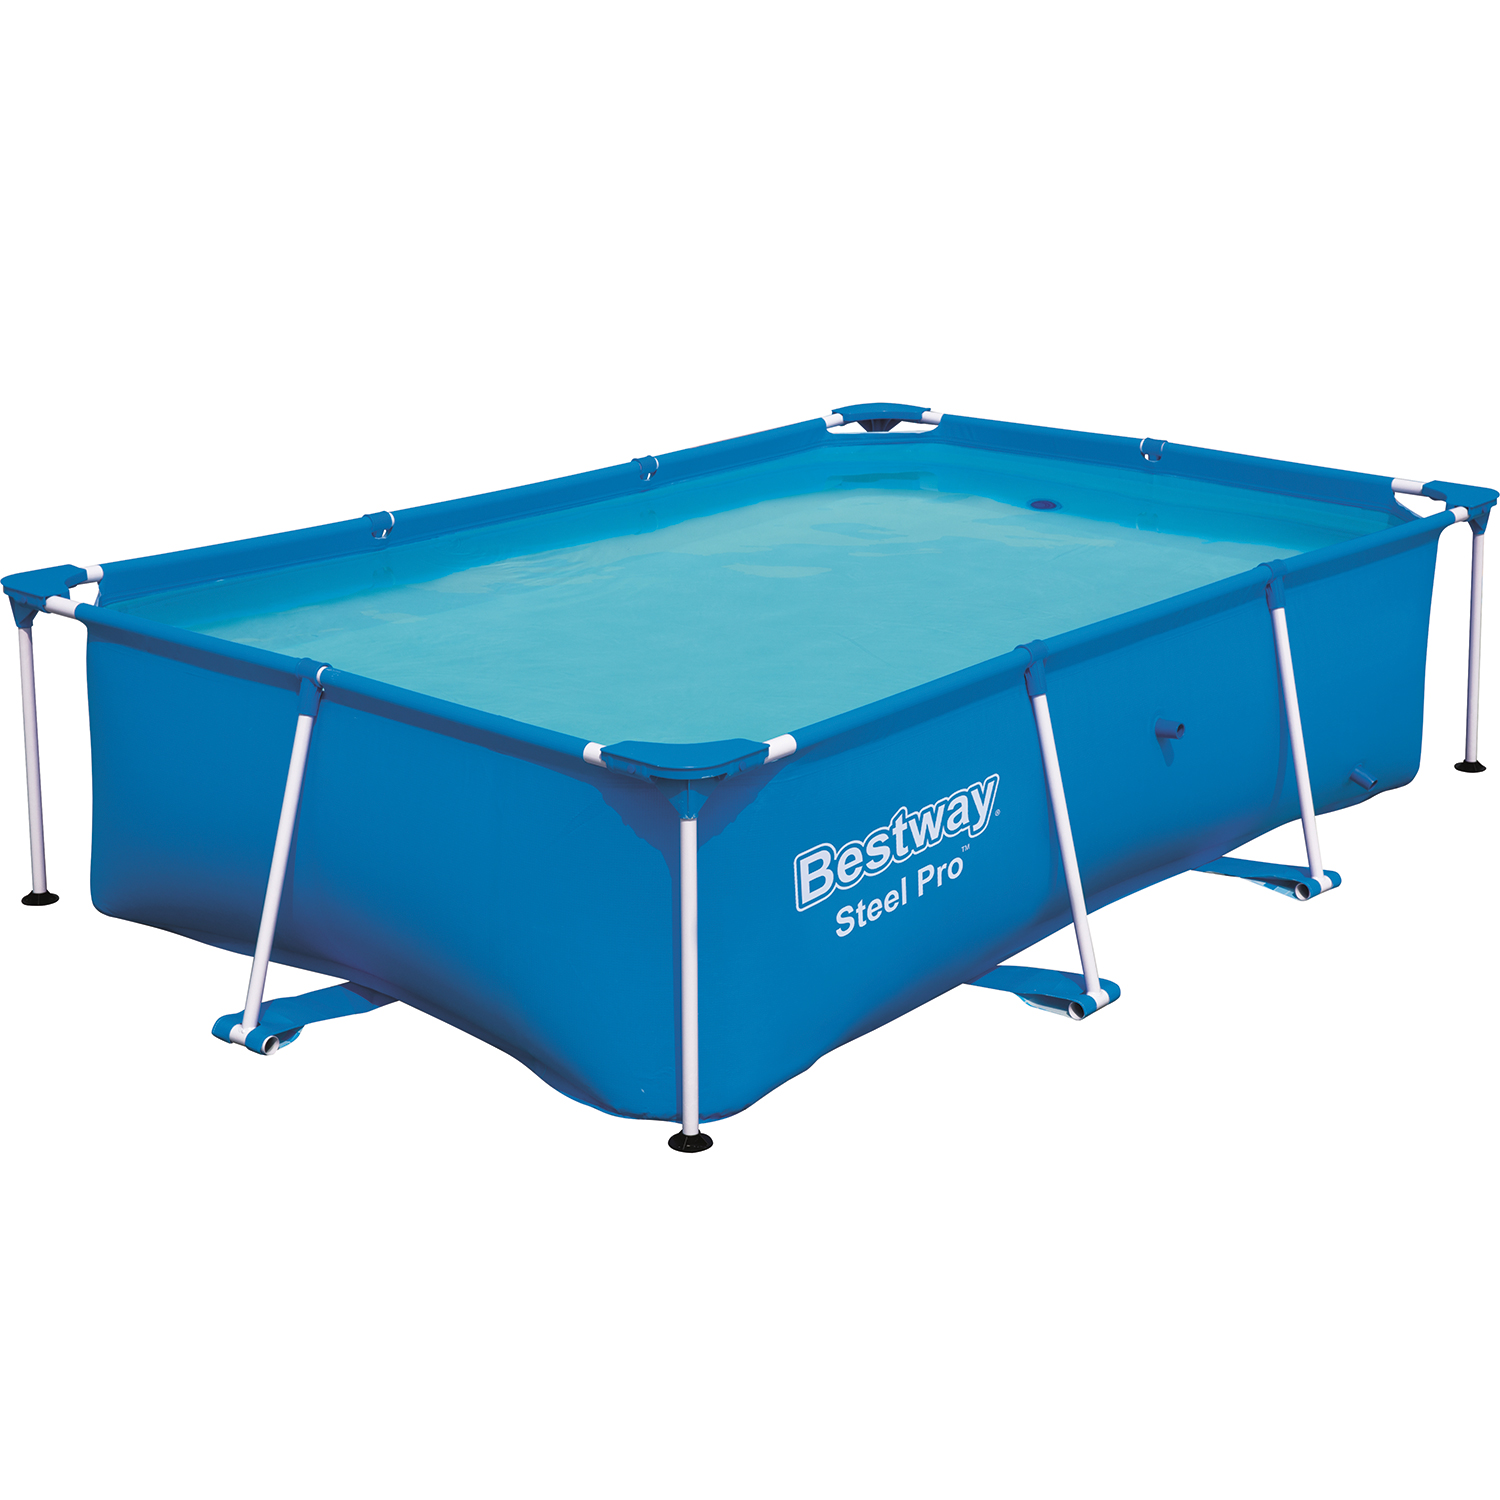 Bestway Steel Pro frame pool 259 x170 x 61 cm